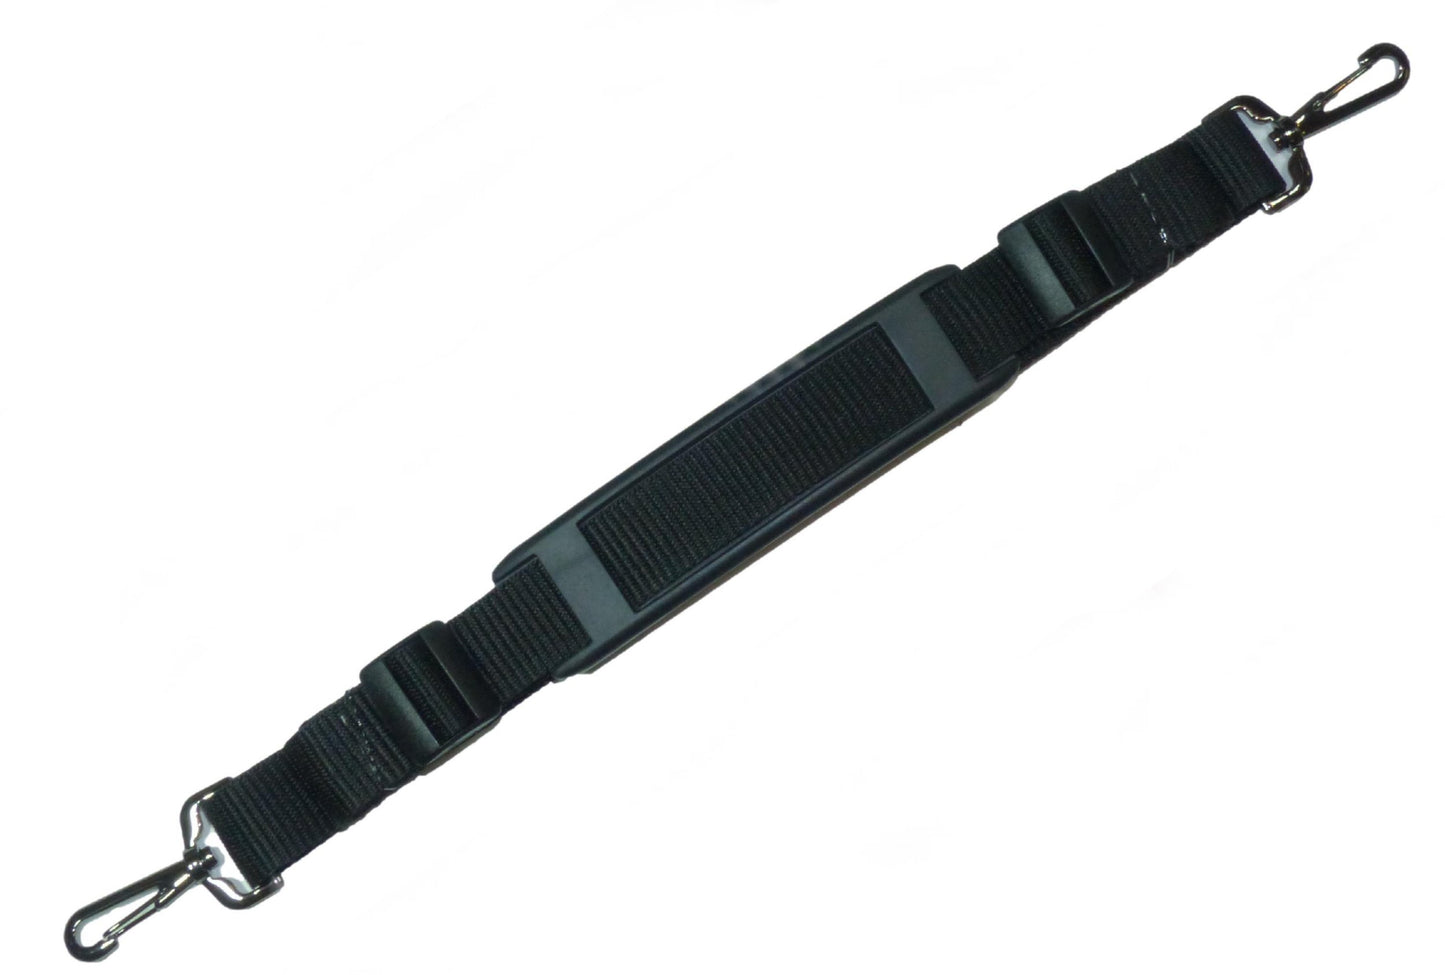 Benristraps 25mm Bag Strap with Metal Buckles and Shoulder Pad, 150cm in black